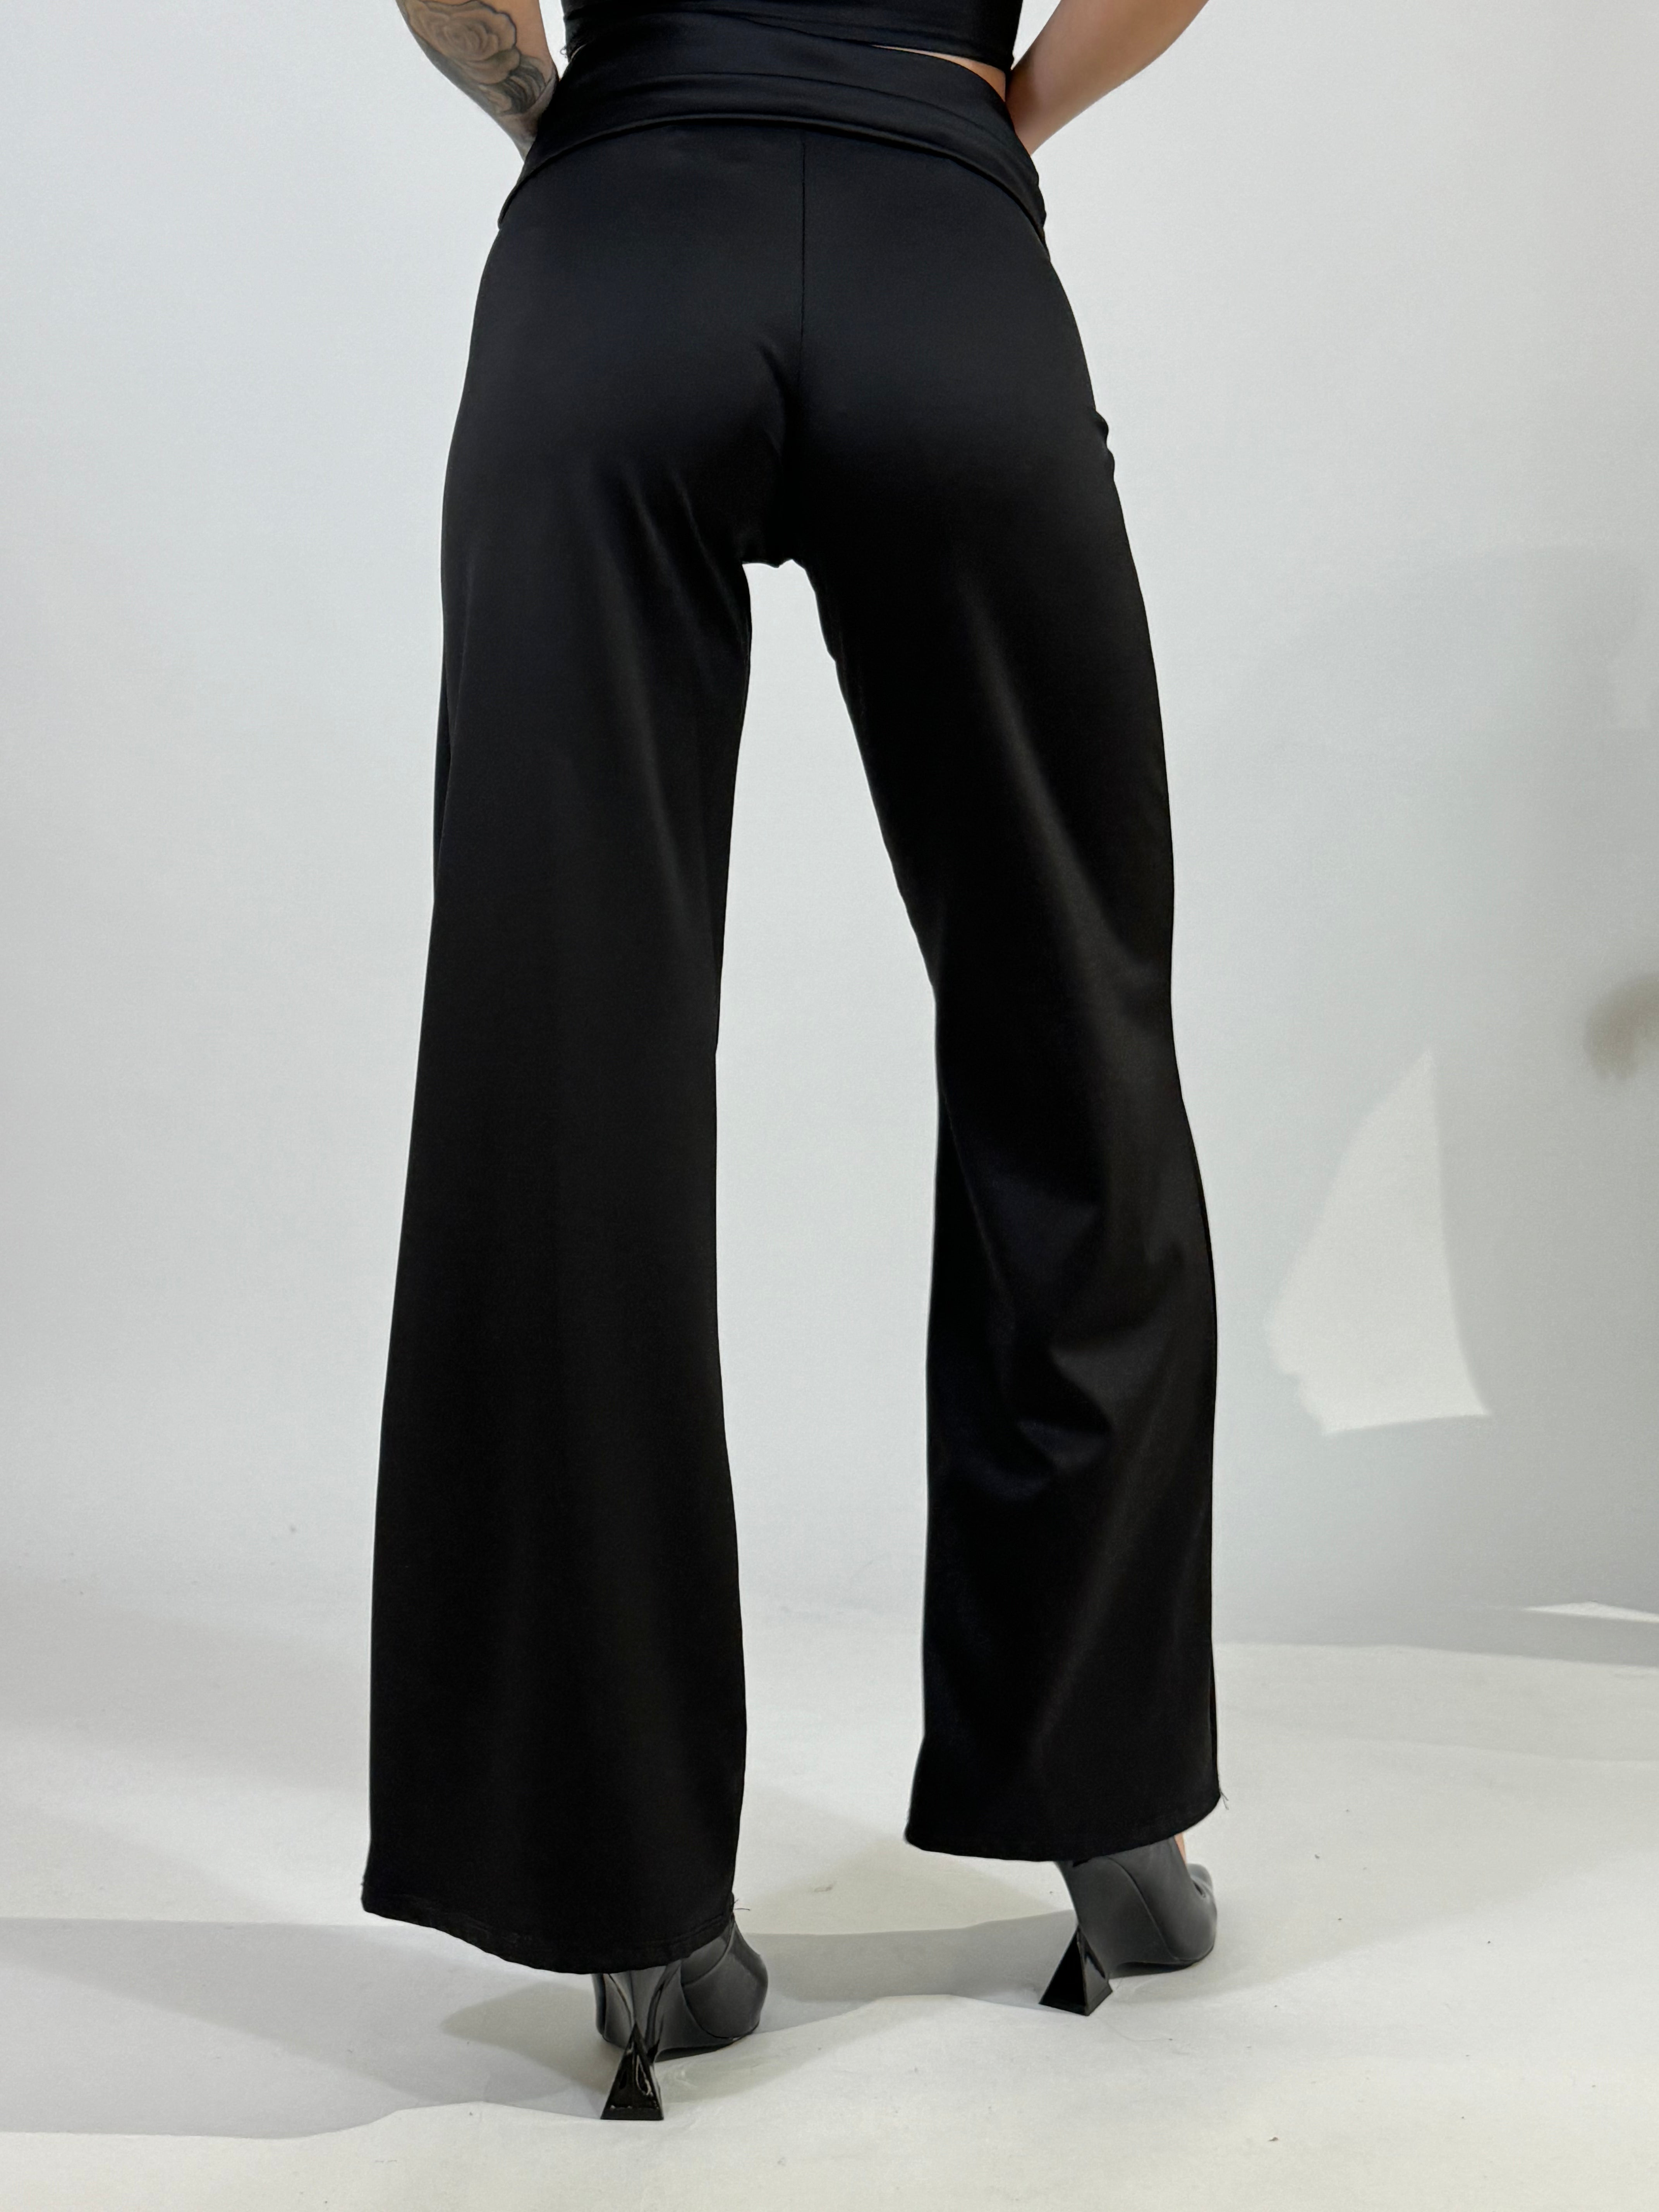 Completo pantalone + top Victoria ILMH in lycra